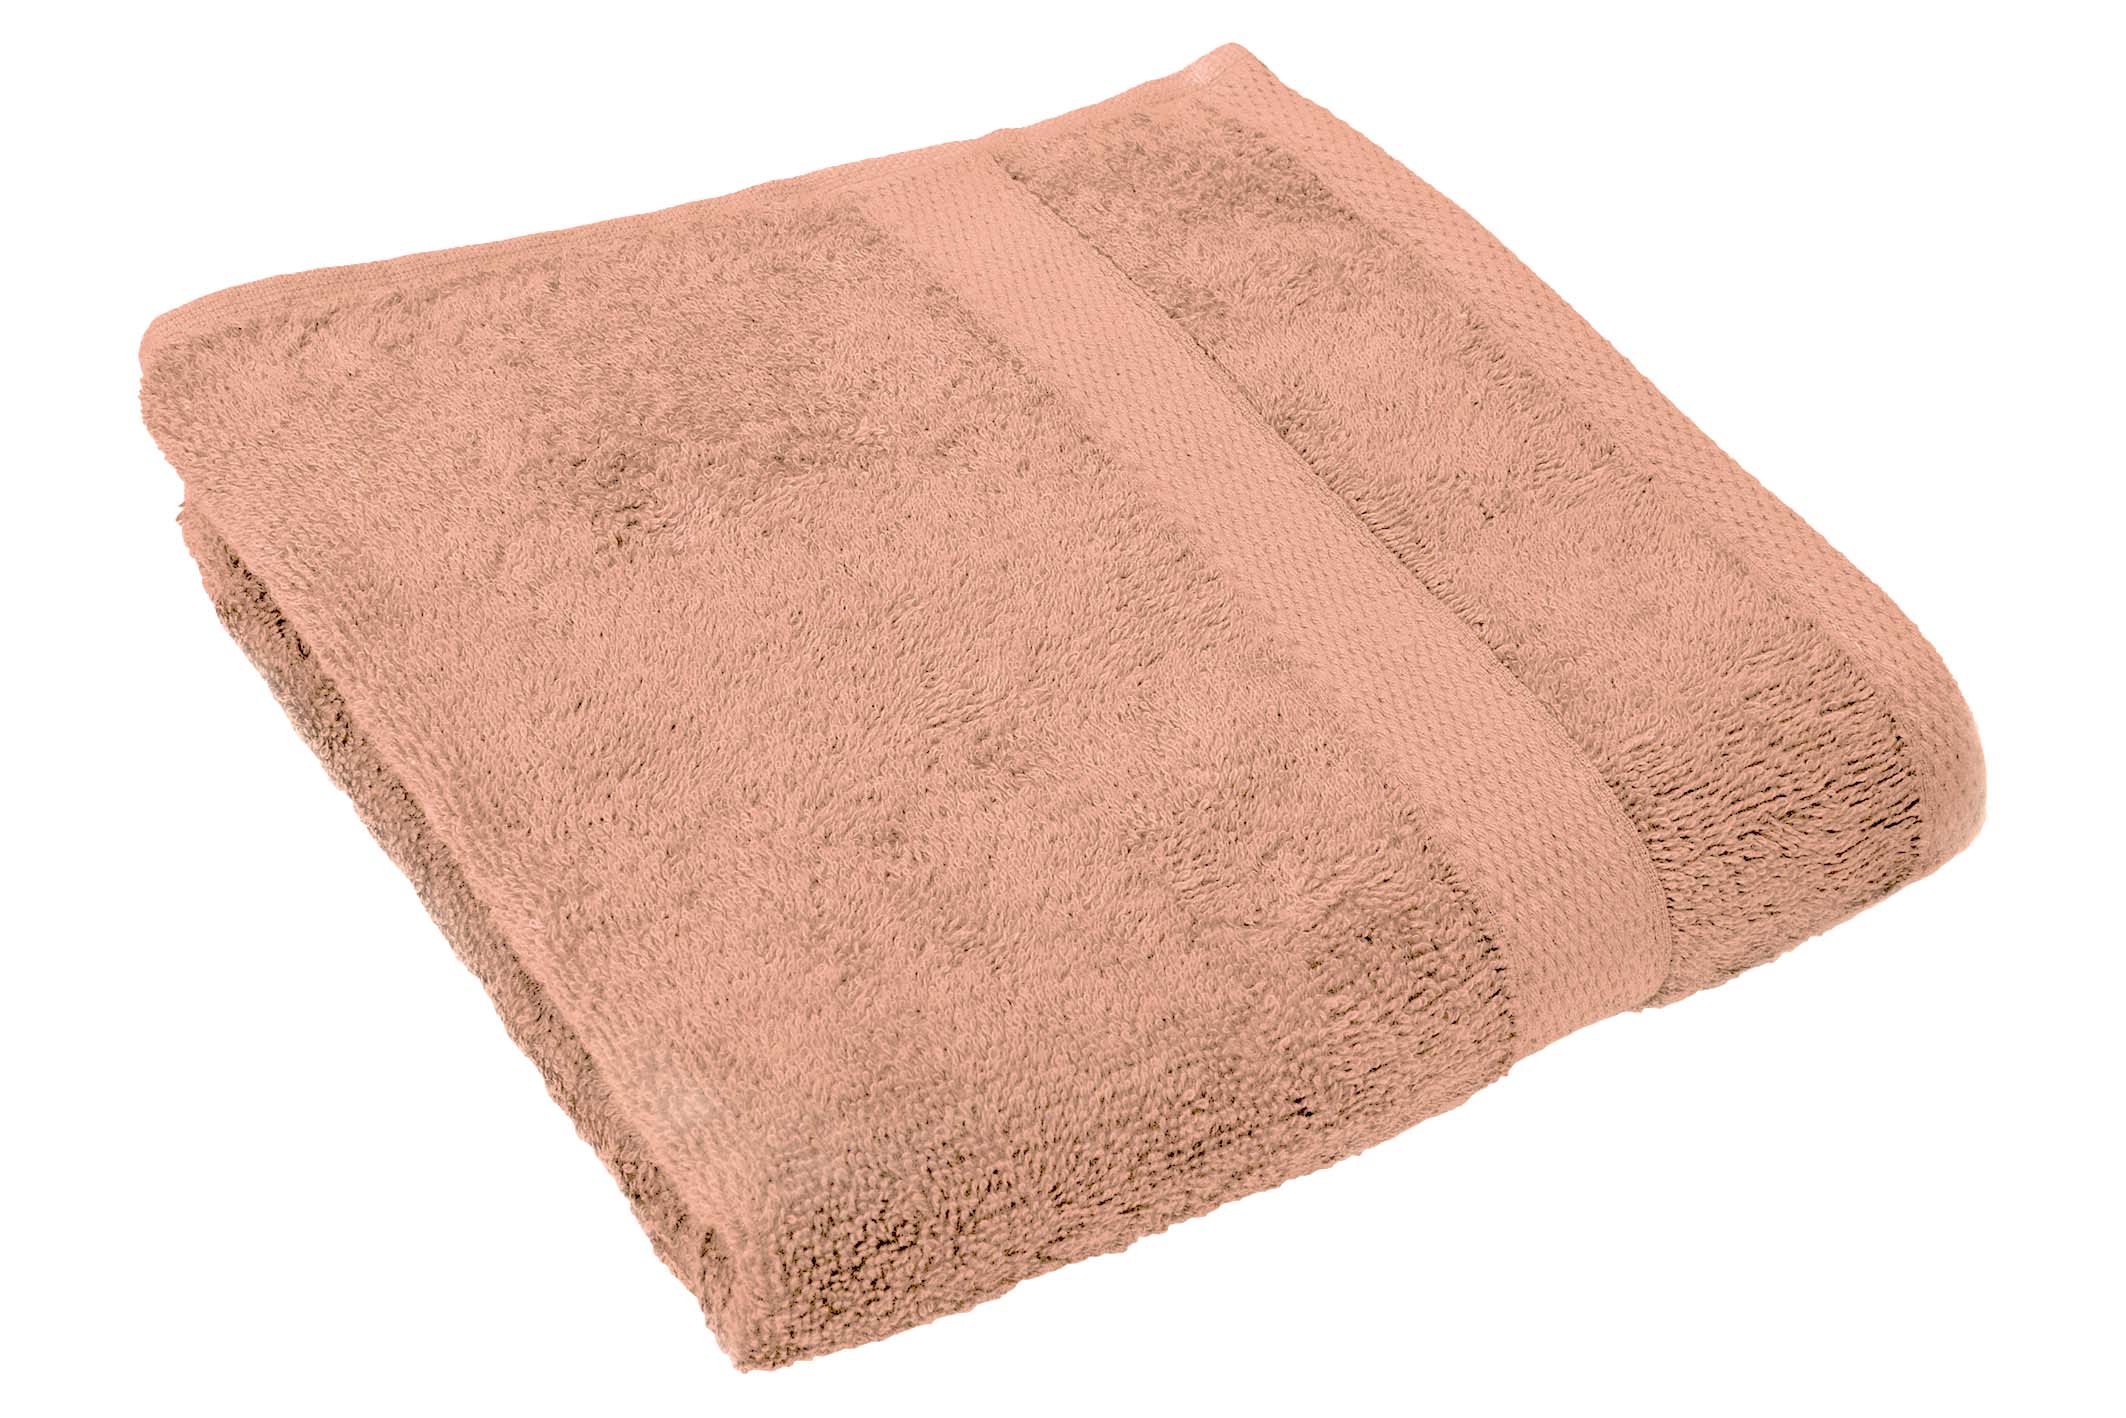 Bath towel 50x100cm, soft pink